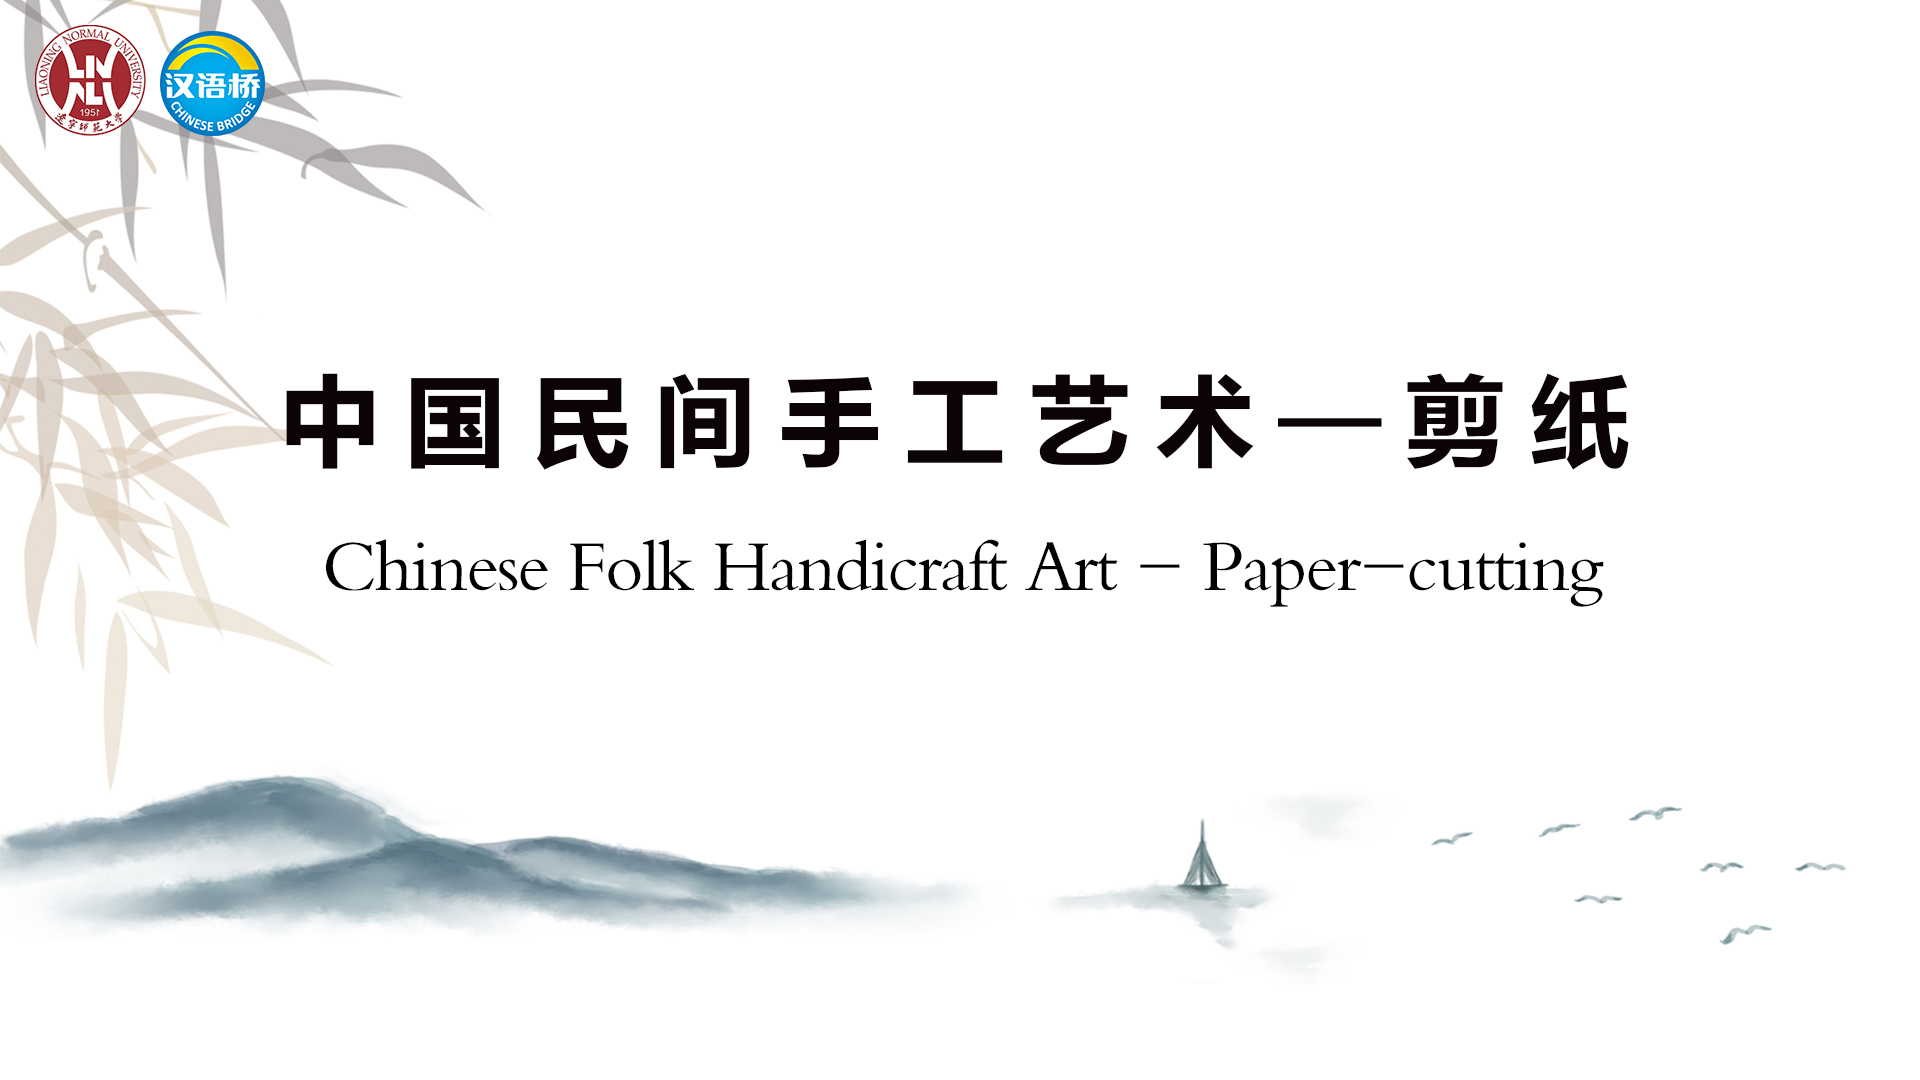 Chinese Folk Handicraft Art—Paper—cutting